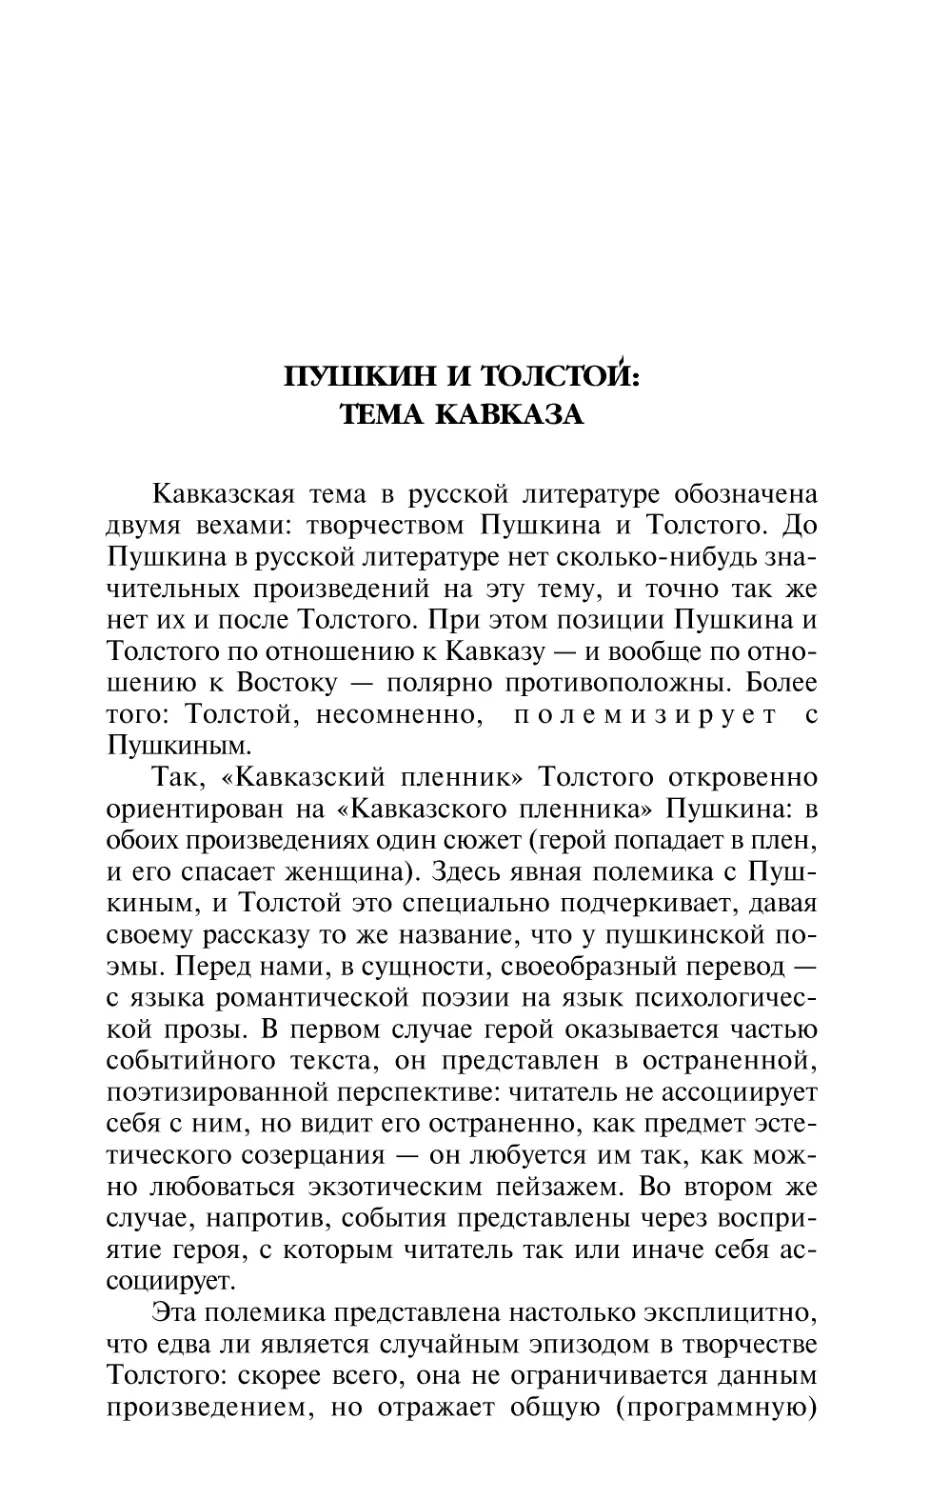 Пушкин и Толстой: тема Кавказа